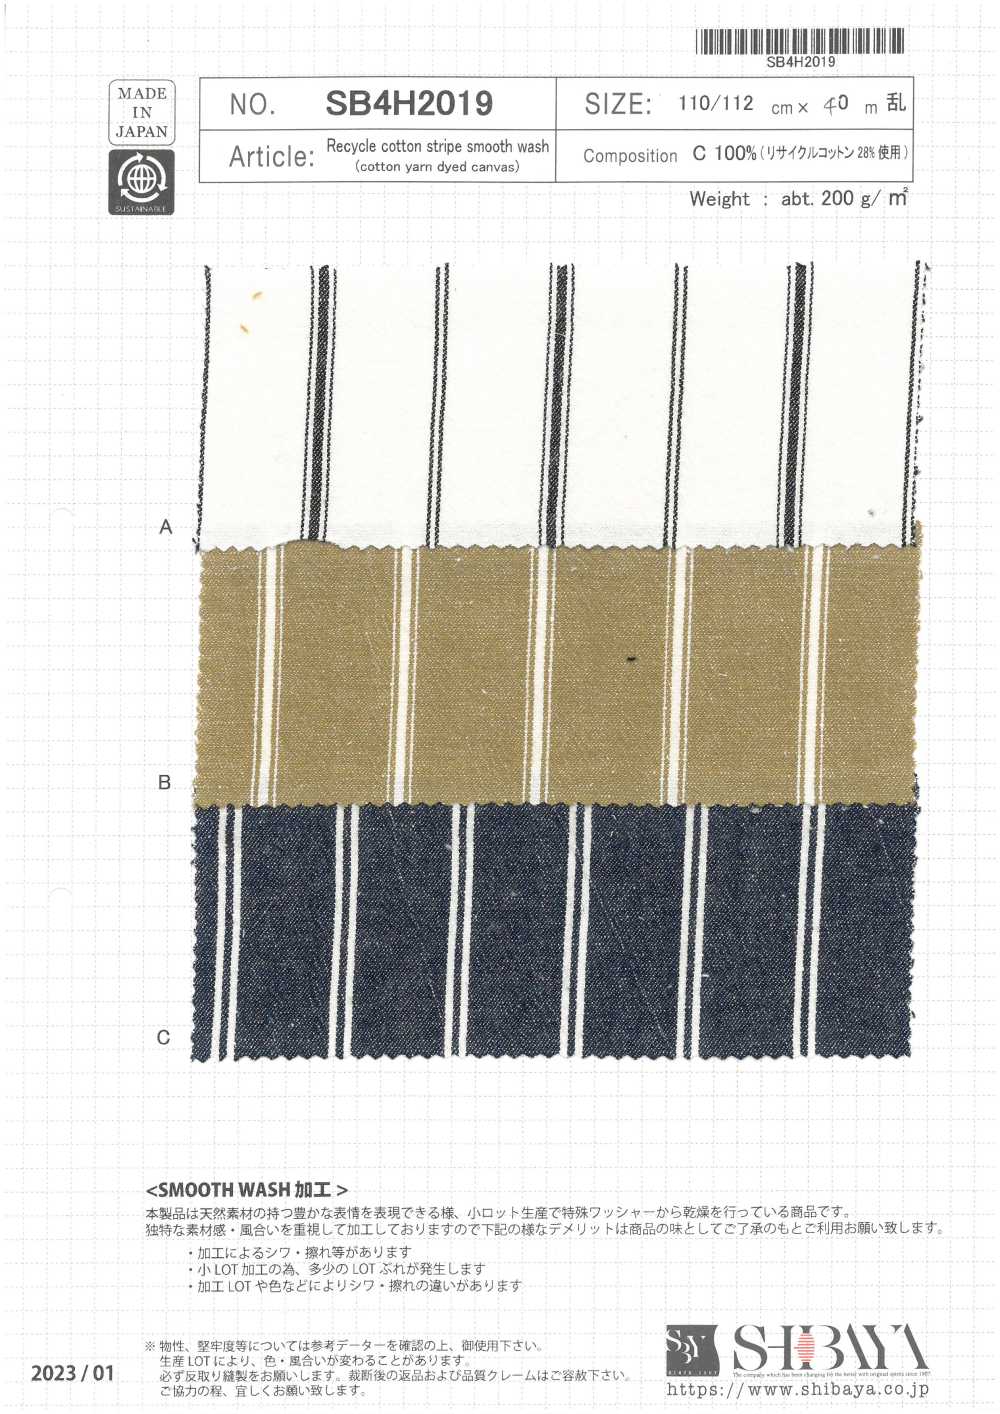 SB4H2019 Recycled Cotton Striped Circular Interlock Knitting Wash[Textile / Fabric] SHIBAYA